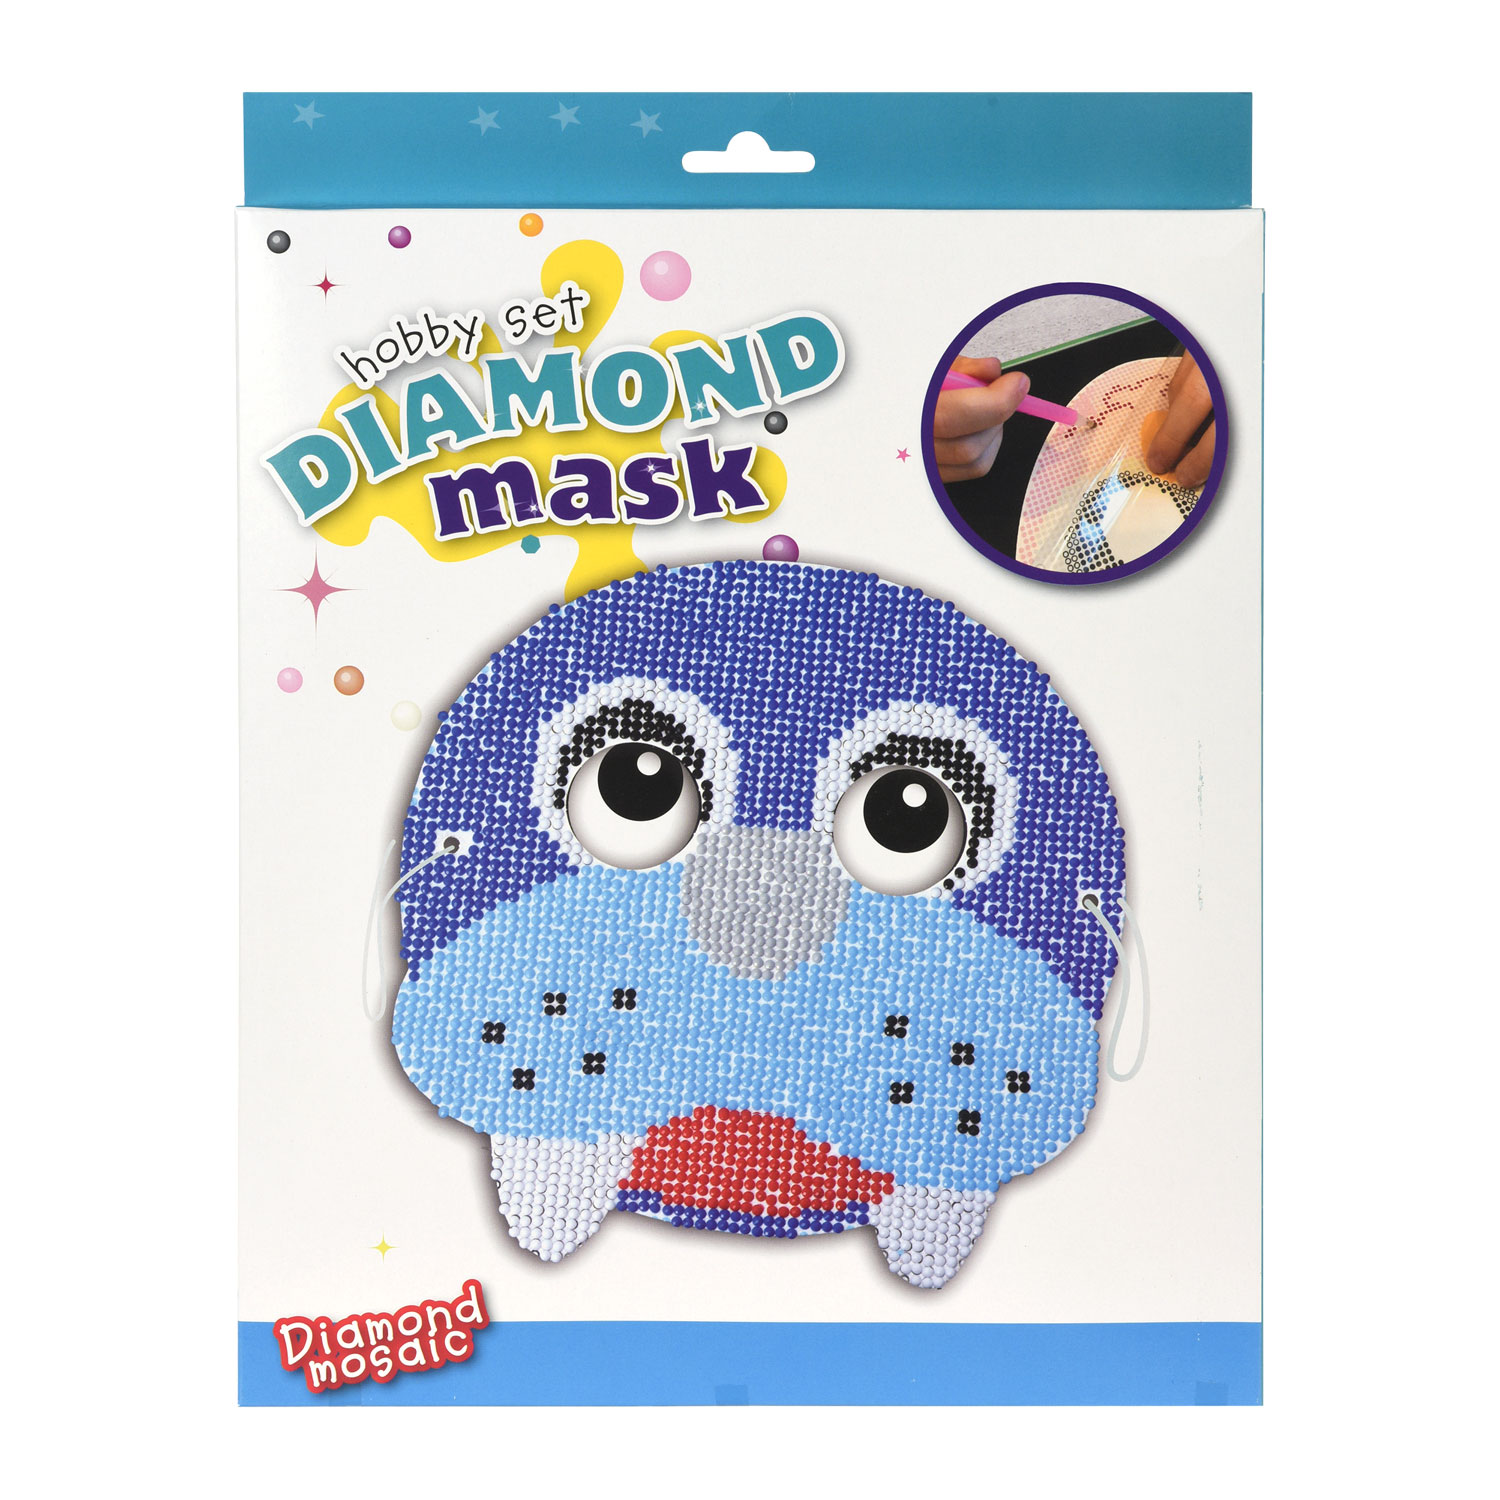 Masques d'animaux en diamant Hobbyset